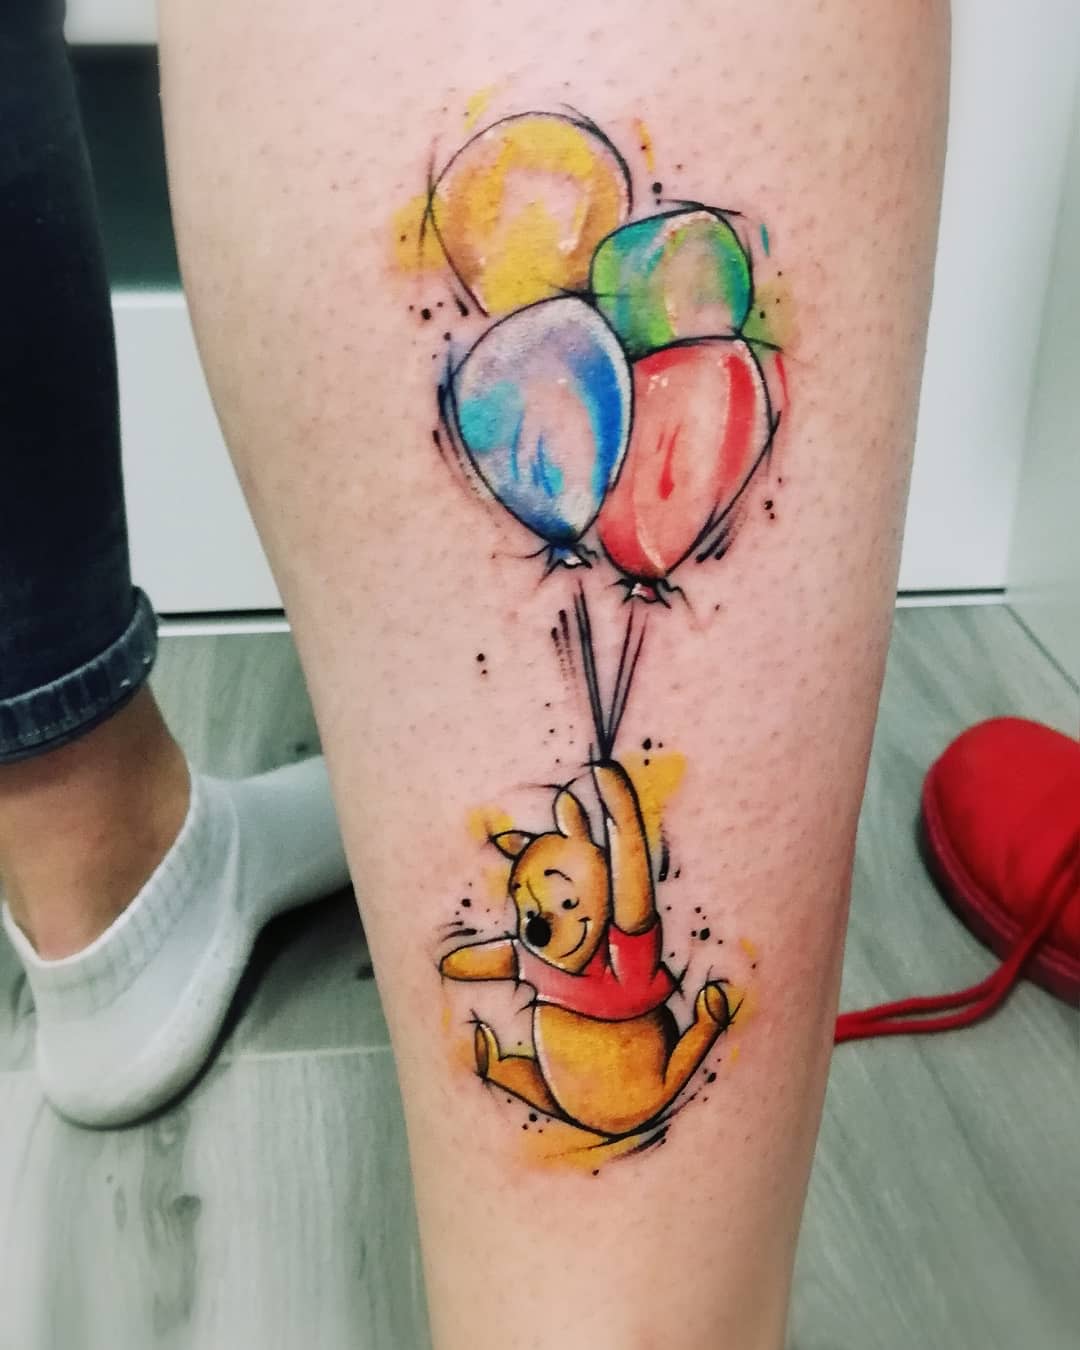 Tatuaje de Winnie the Pooh en acuarela -novak_art_tattoo